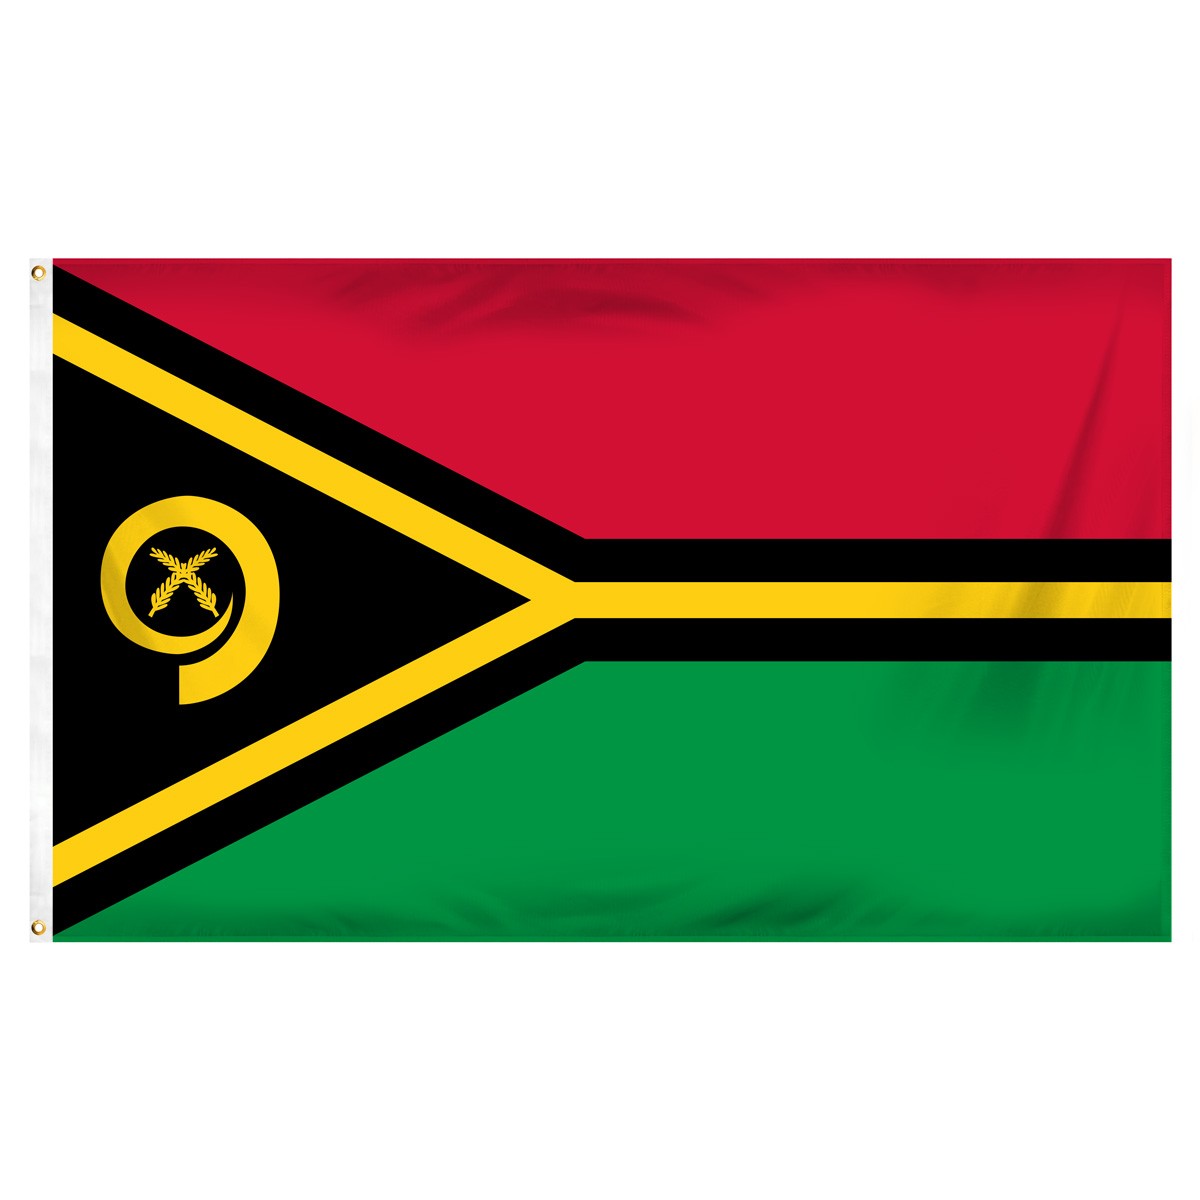 Vanuatu Beach Flag and Sailing Flag